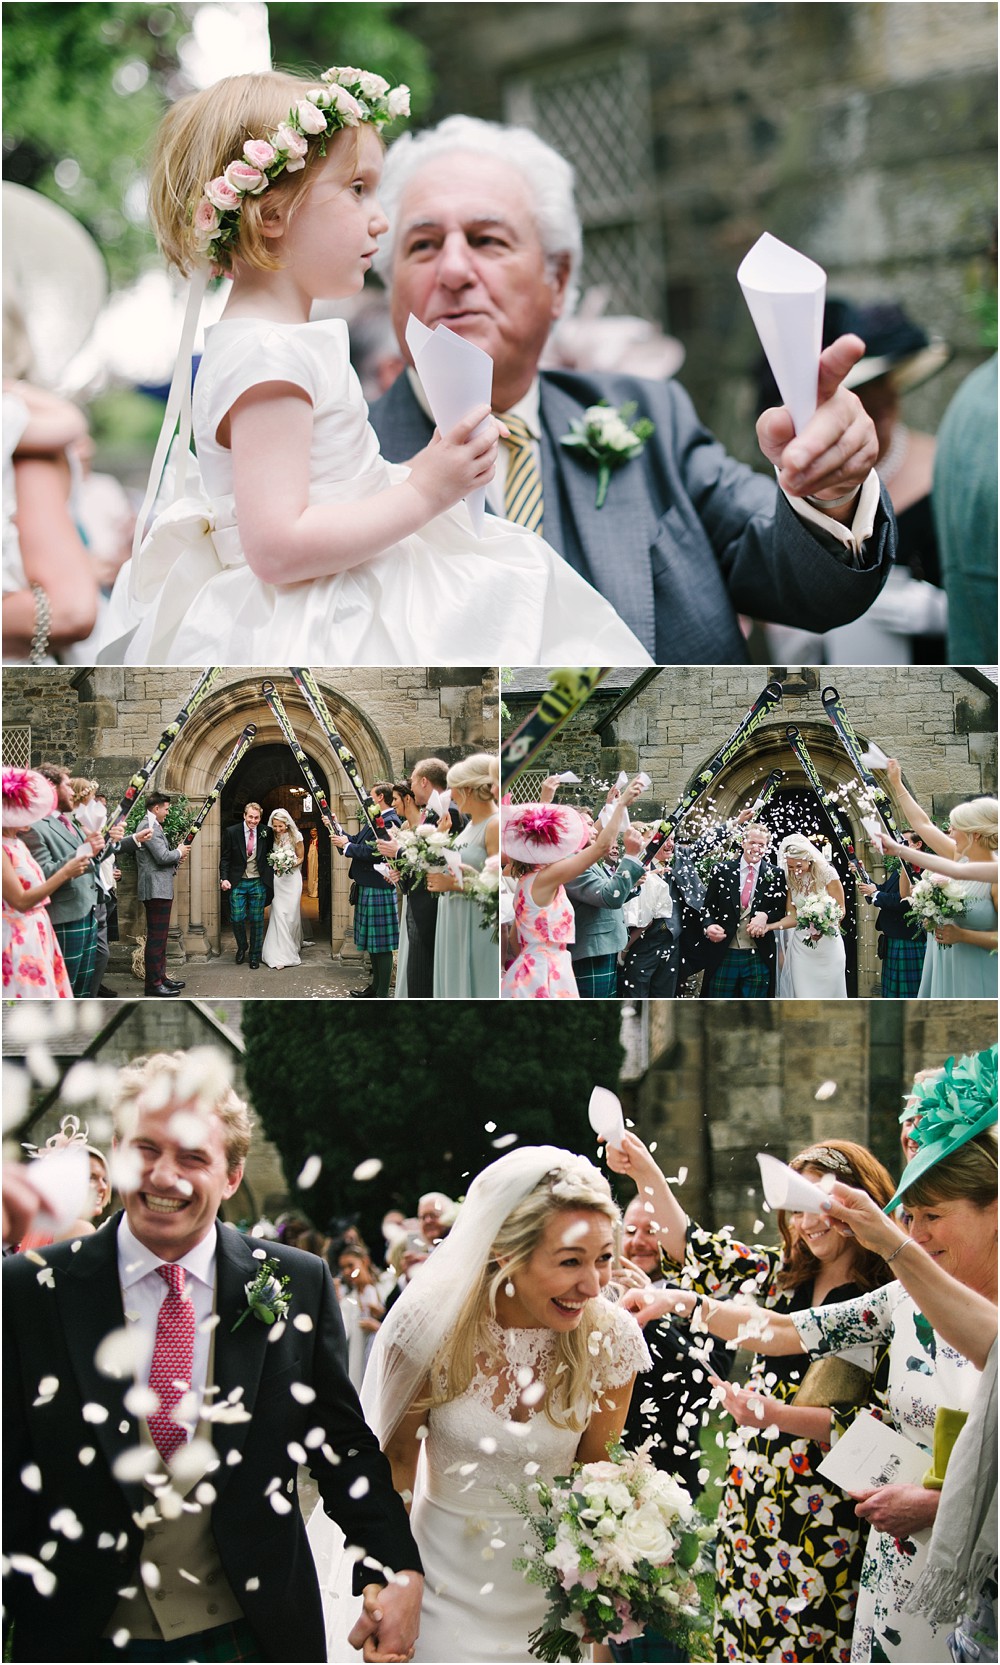  wedding photographer in northumberland capheaton hall and st andrew's church corbridge
 